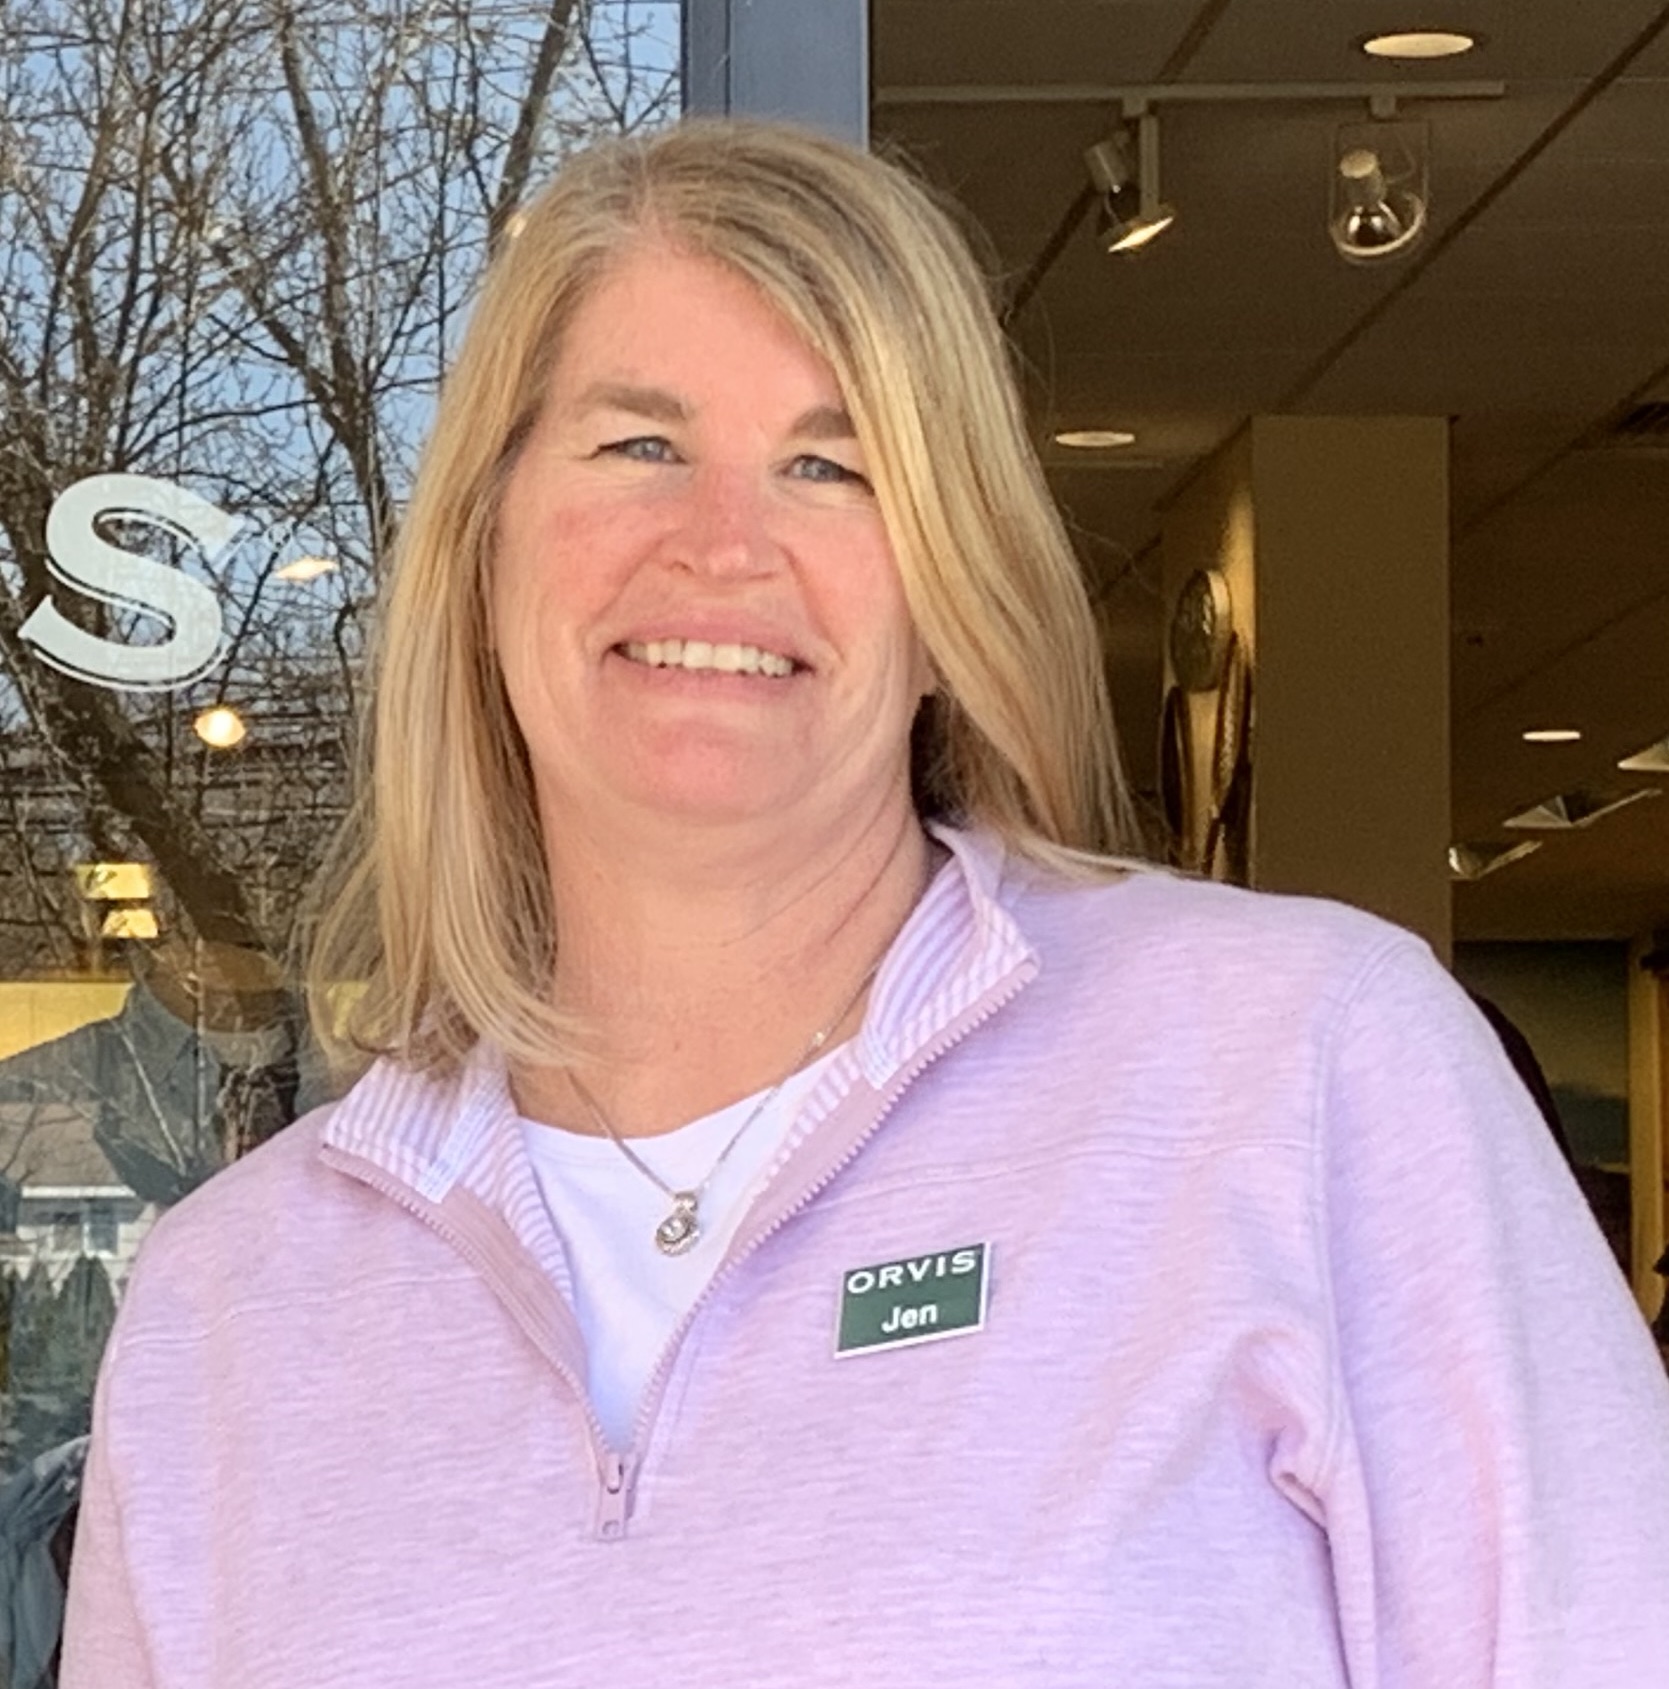 Orvis Retail Store - Darien, CT - Store Manager Jennifer Cuoco